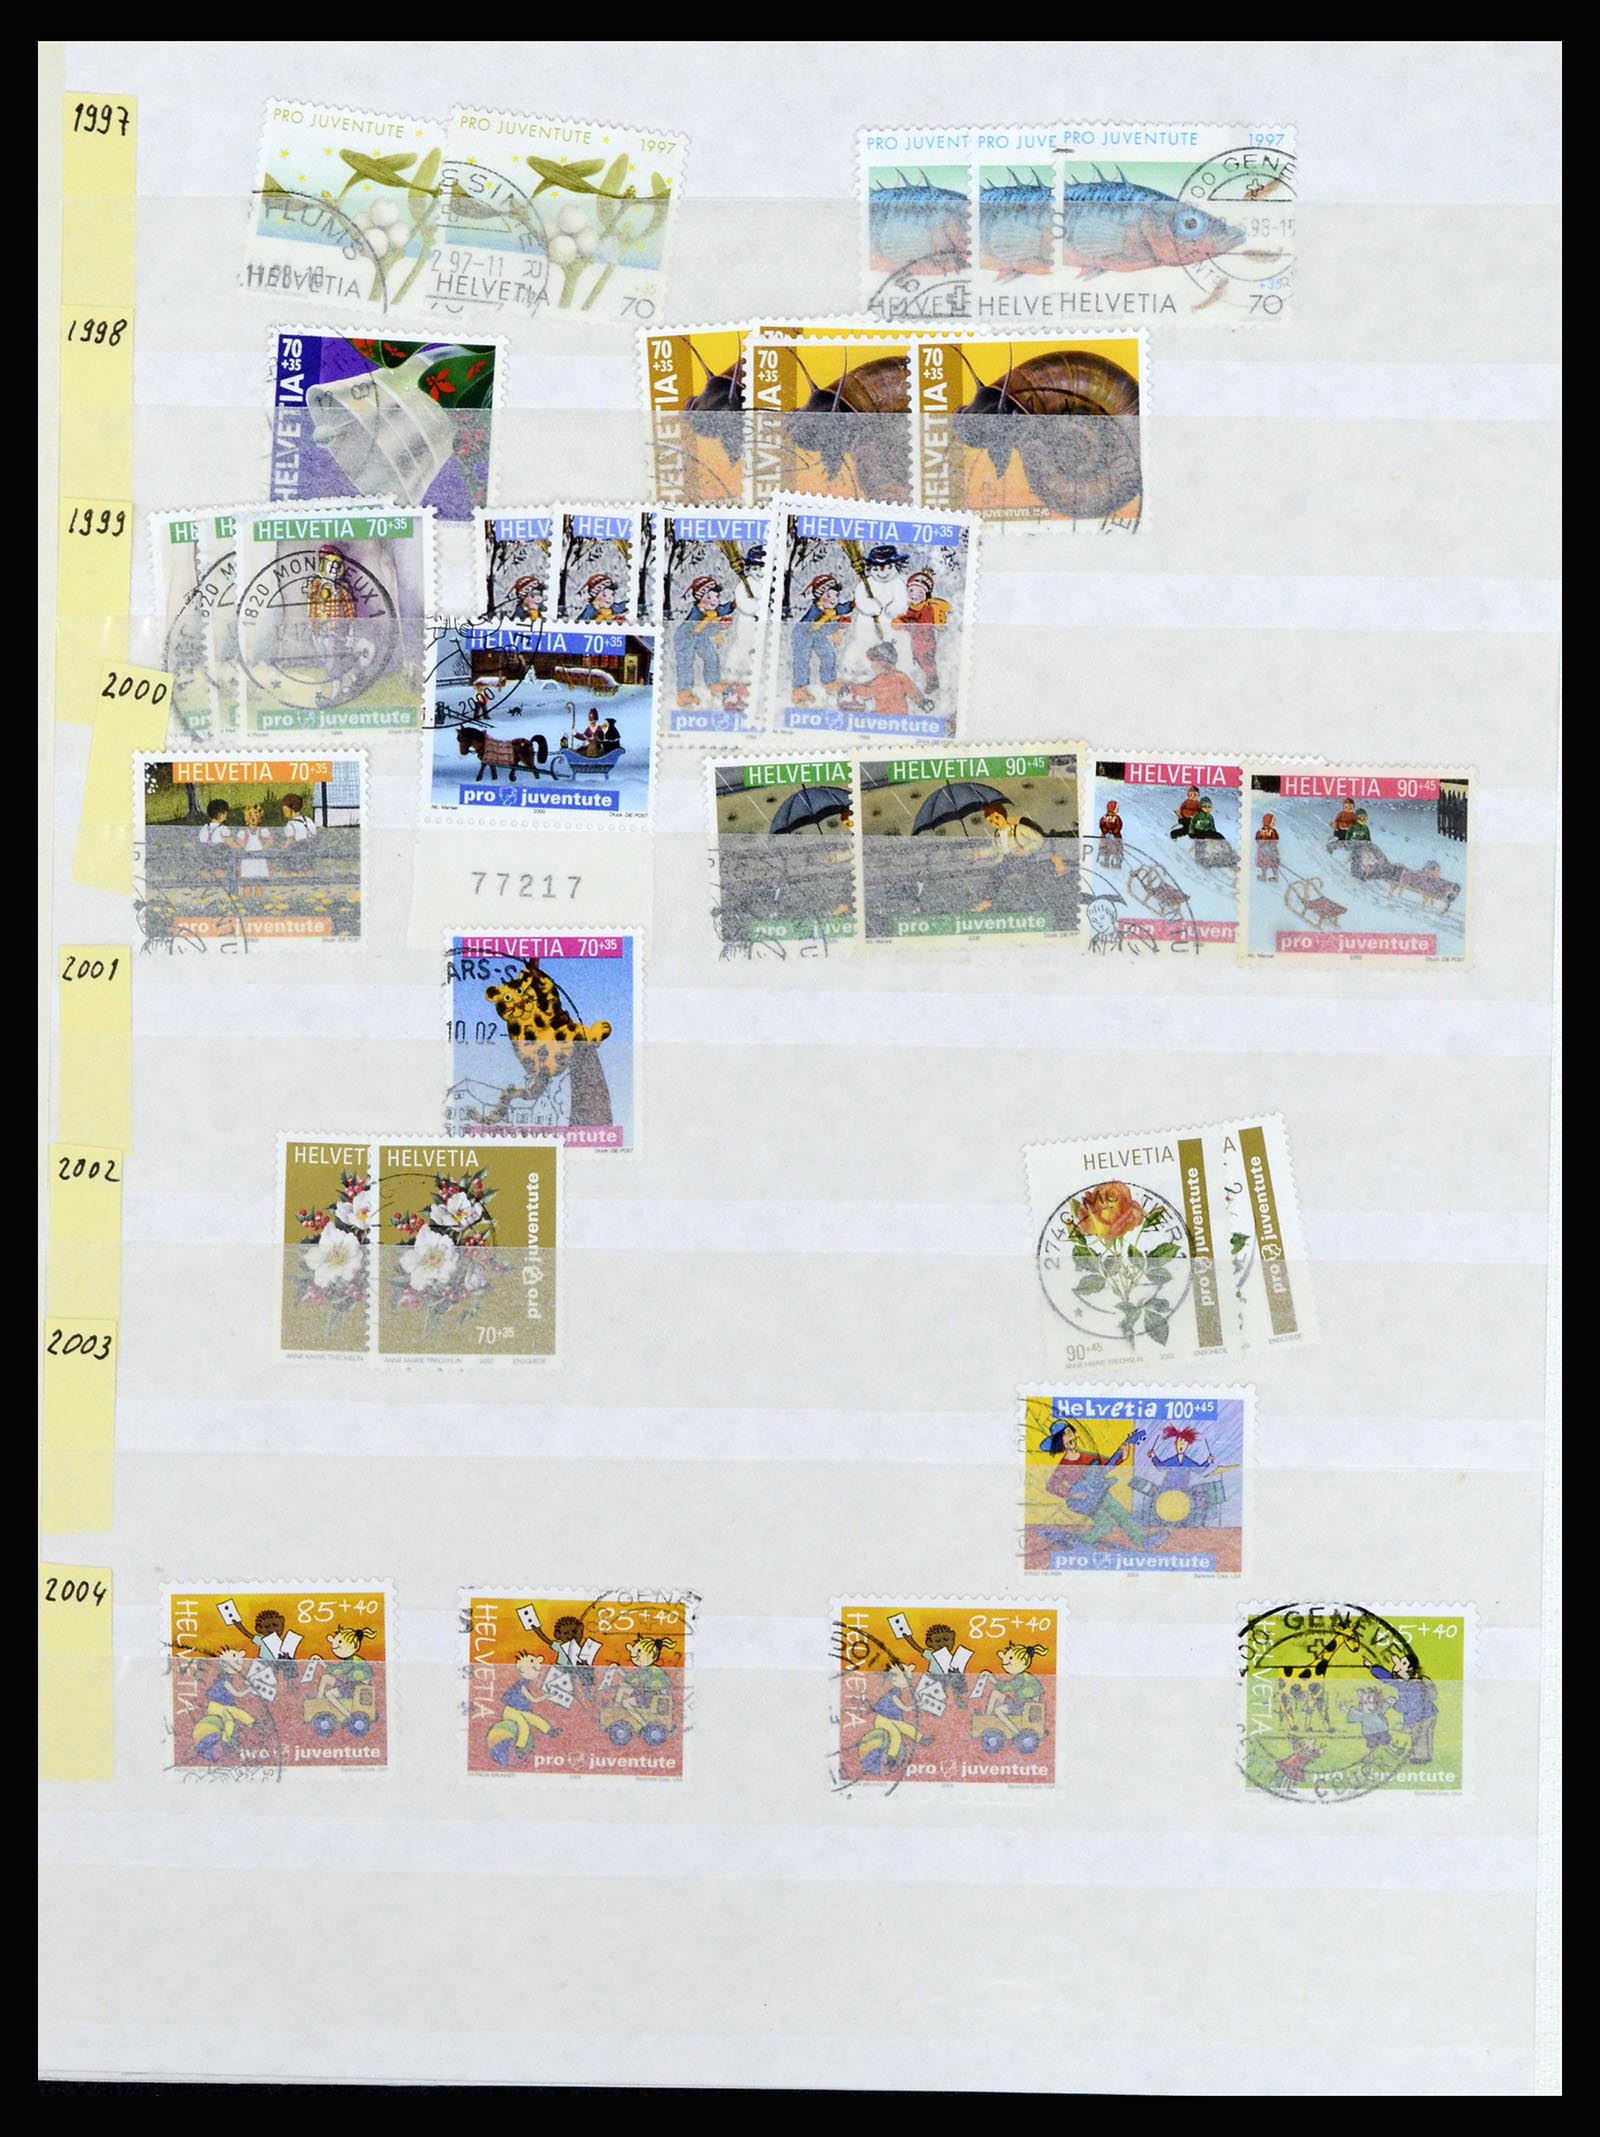 37061 032 - Stamp collection 37061 Switzerland 1913-2000.